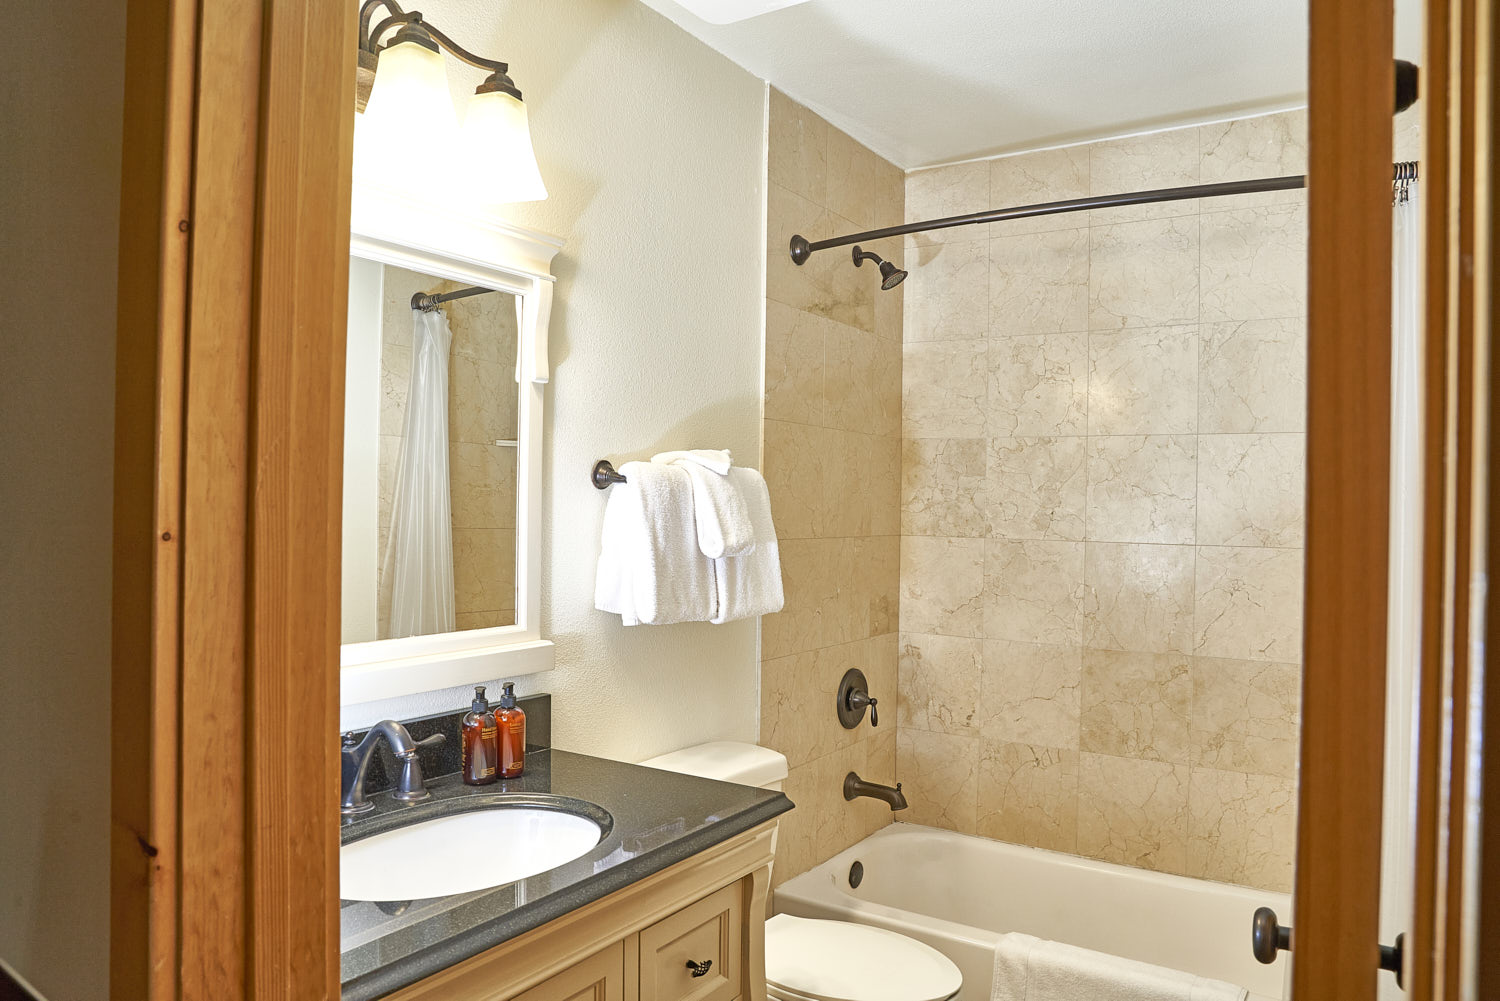 Bathroom with marble finish, corner bathtub, towel on iron rod, mirror above washbasin.